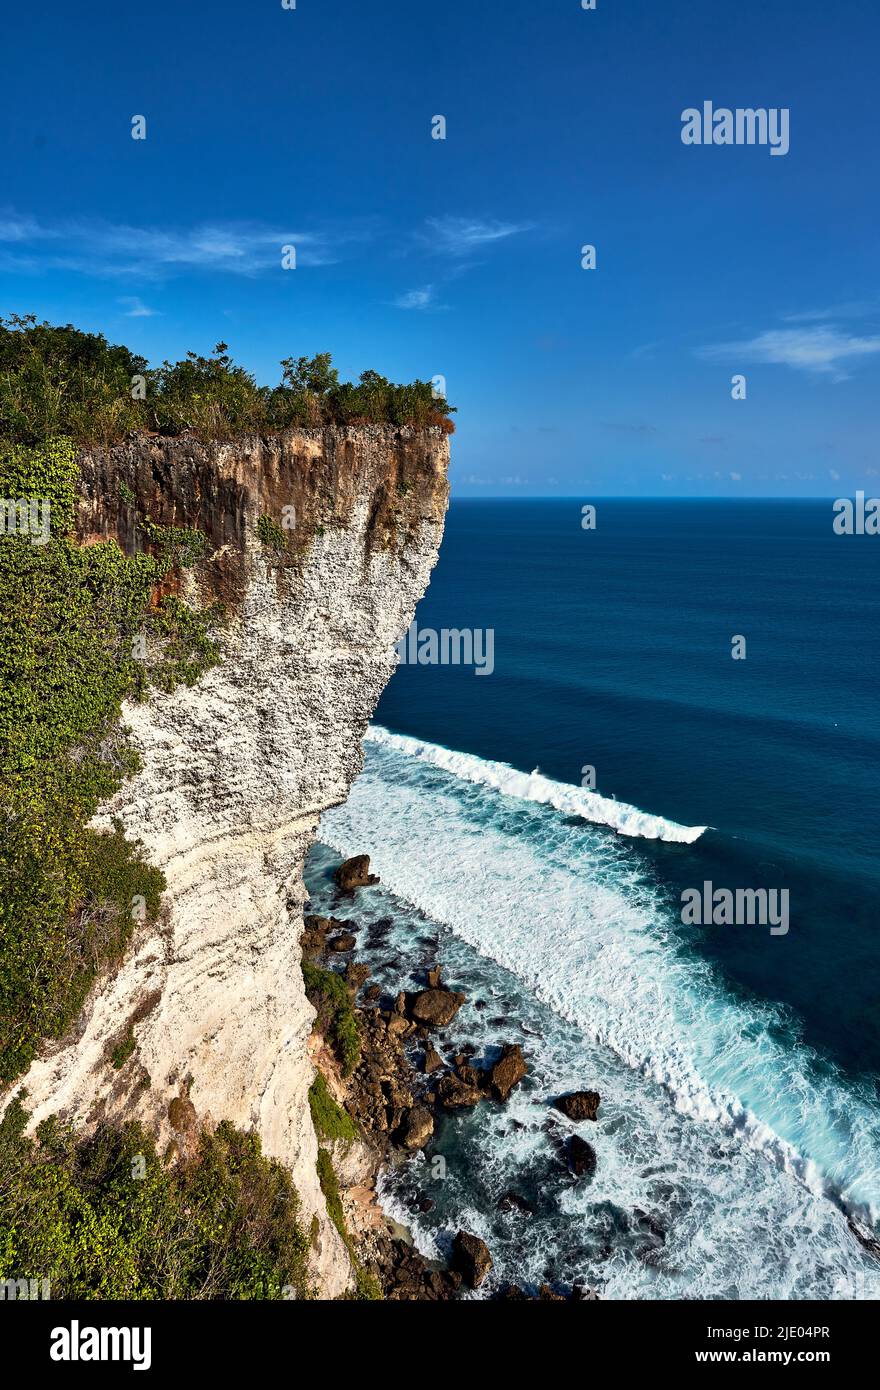 Beaches and seascapes in Nusa Penida Island, Indonesia Stock Photo